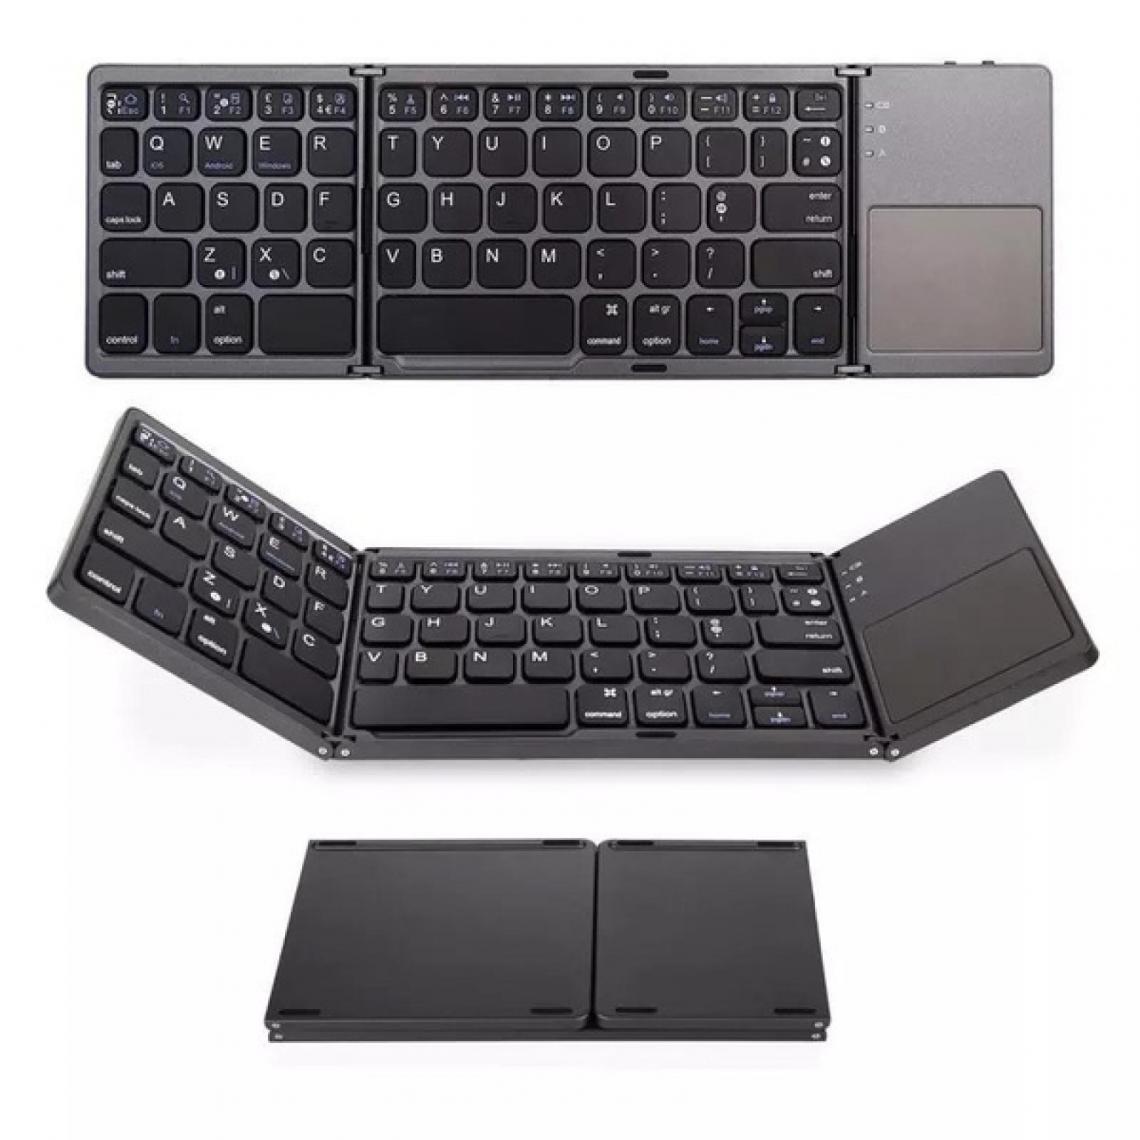 Gengyouyuan - Le clavier sans fil Bluetooth Mini Office Triple Folding Keyboard prend en charge trois systèmes - Clavier